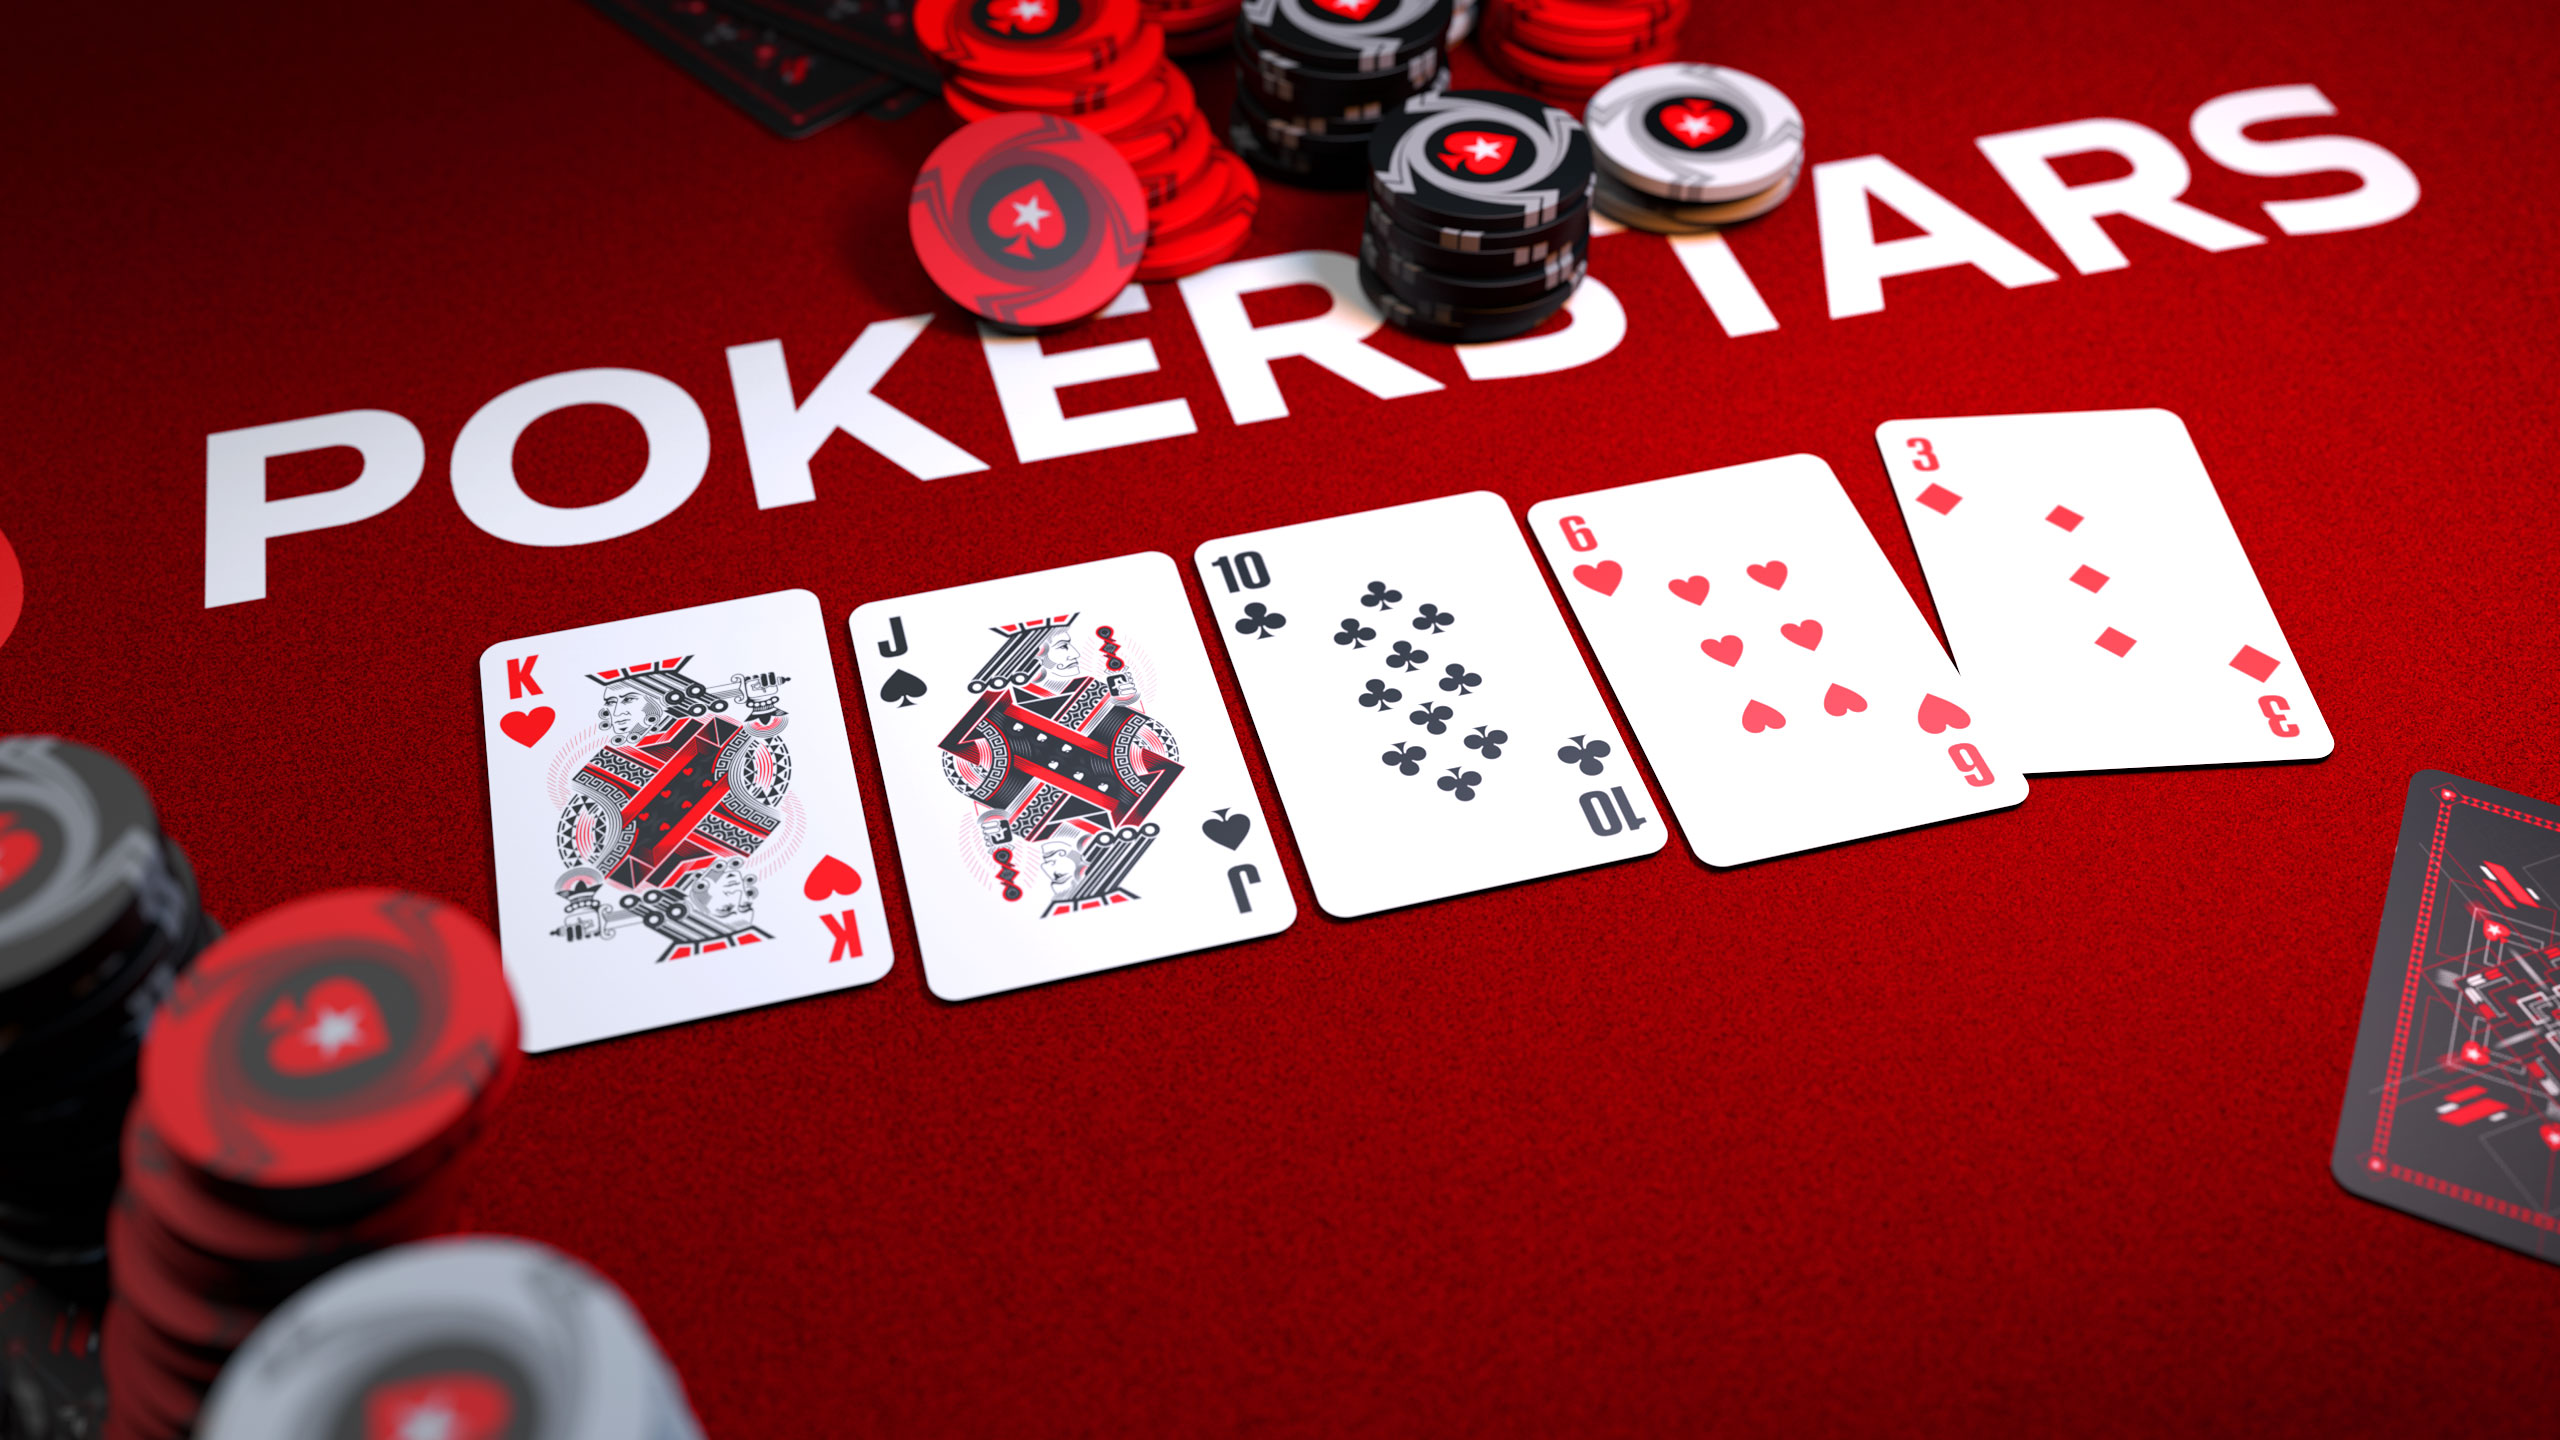 manos-de-poker-clasificaci-n-pokerstars-learn-latam